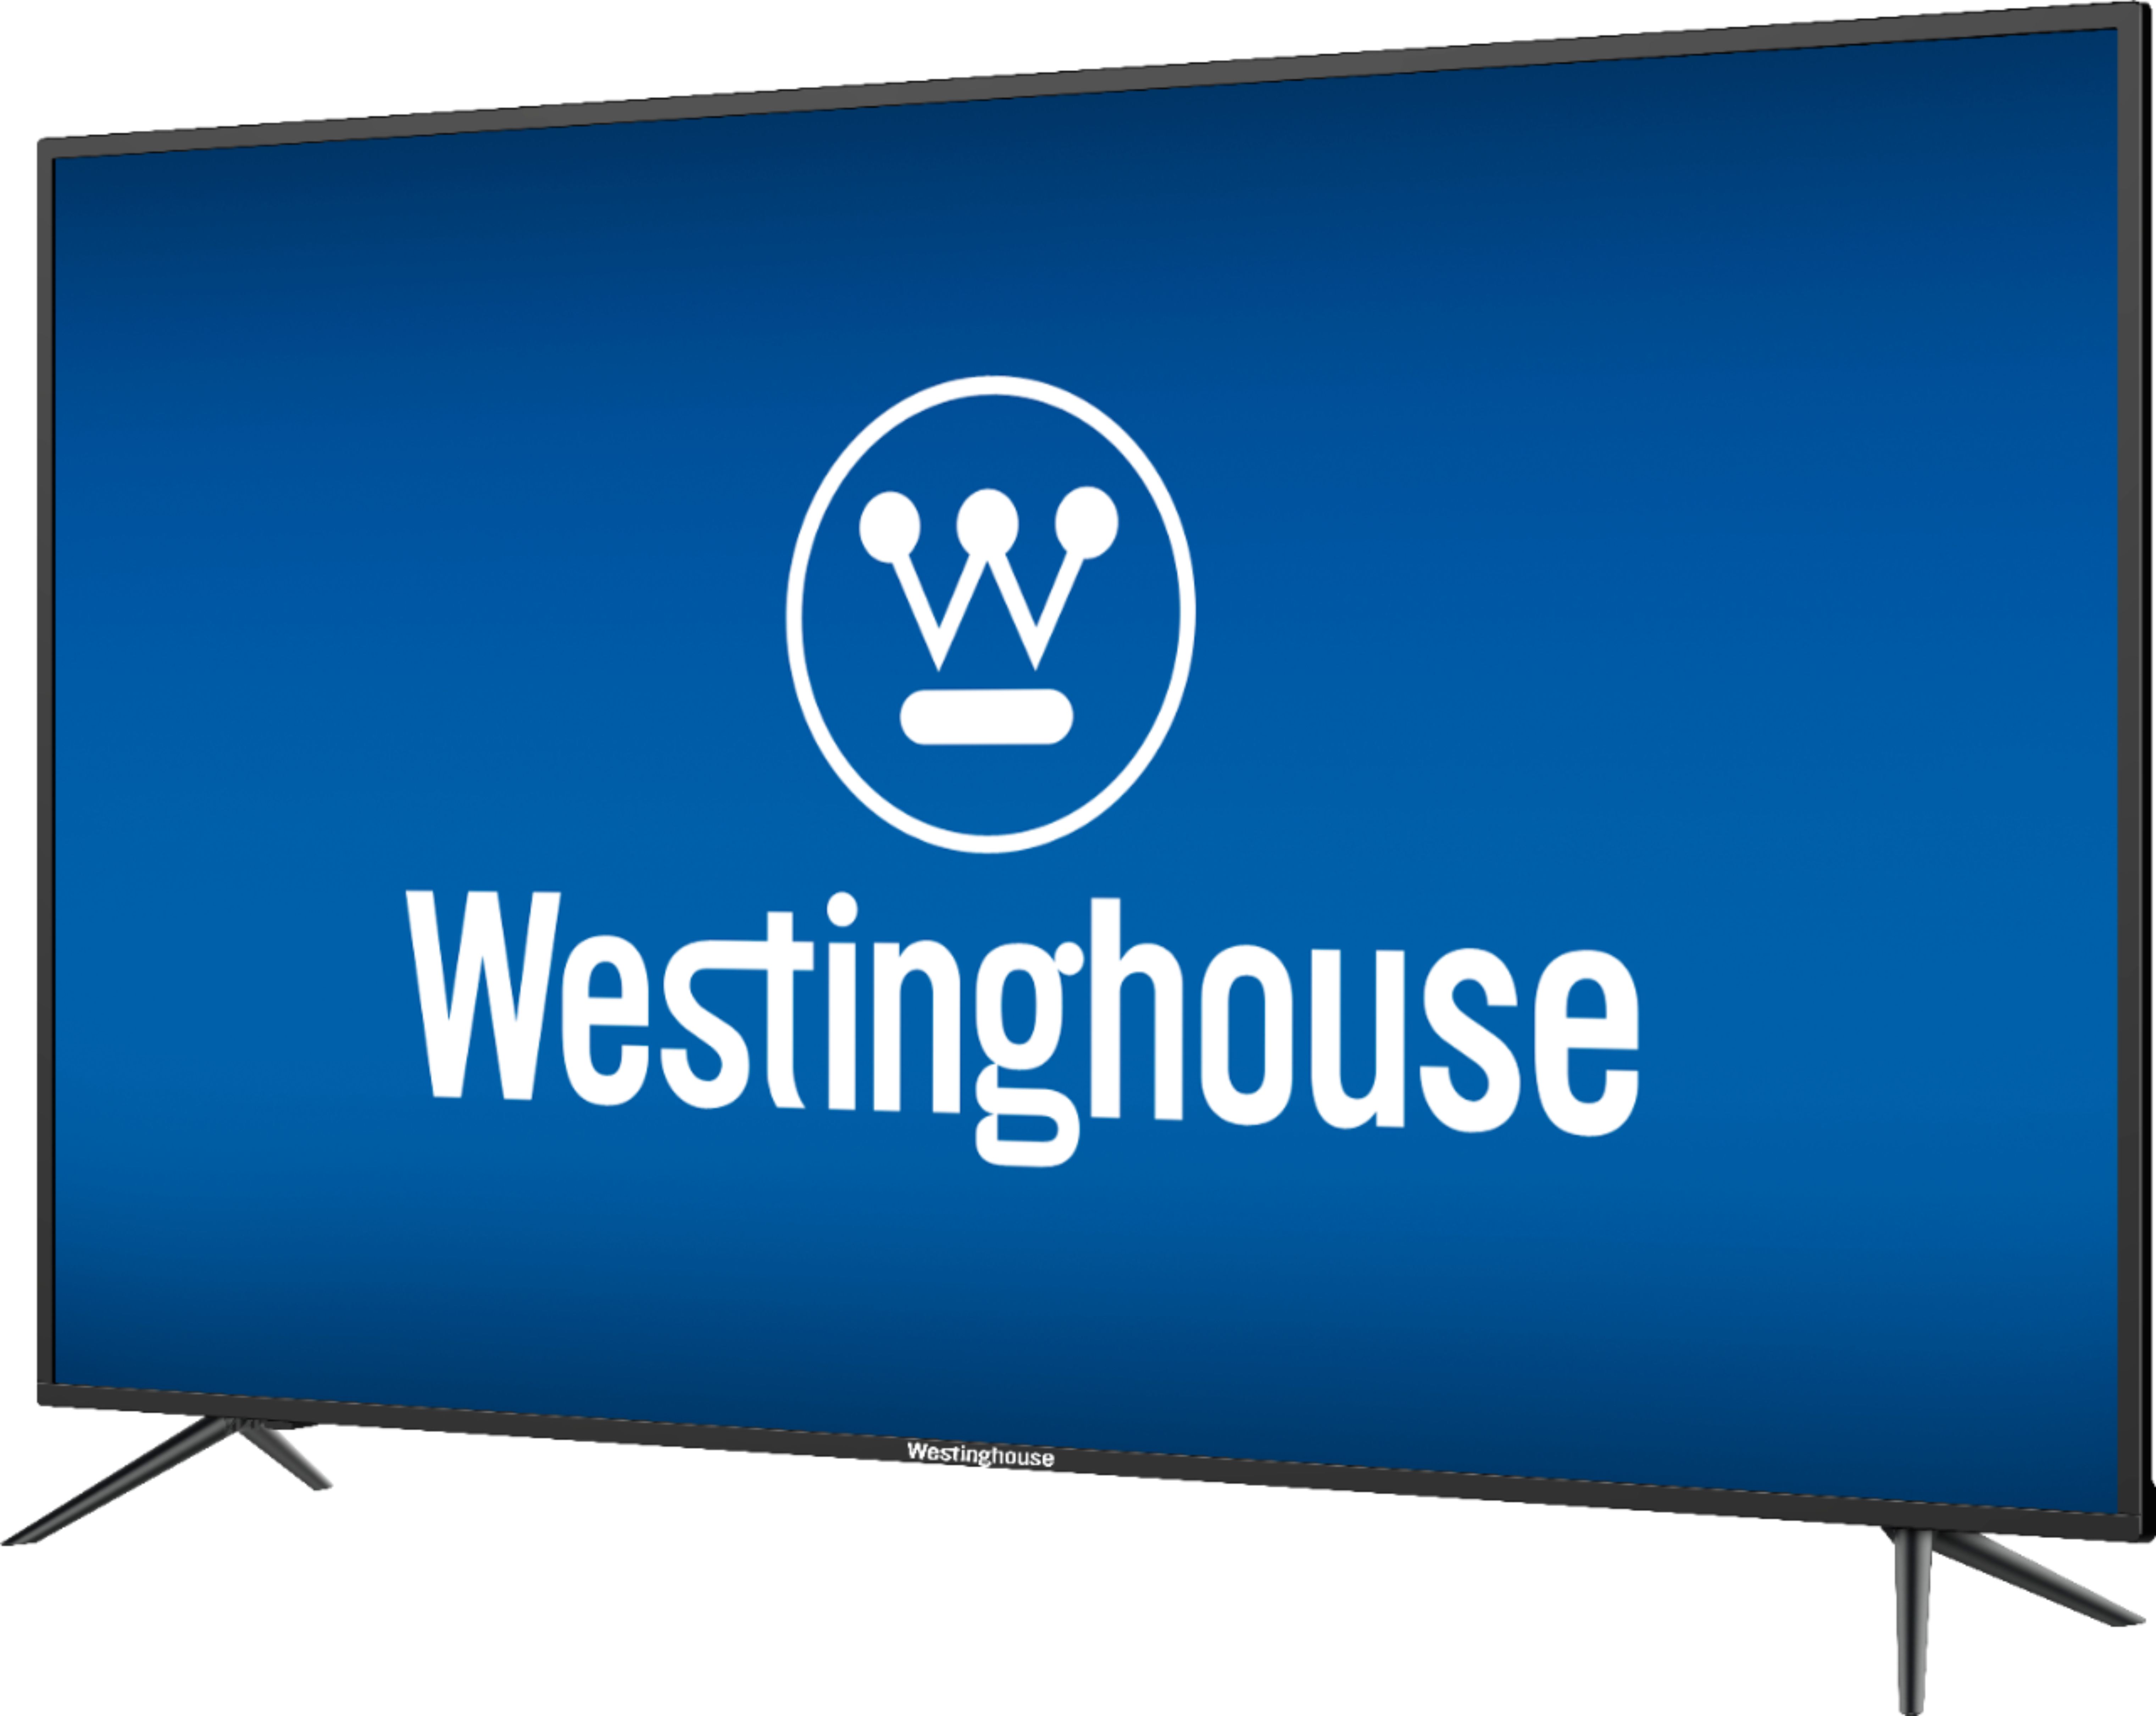 Westinghouse Tv Mail In Rebates